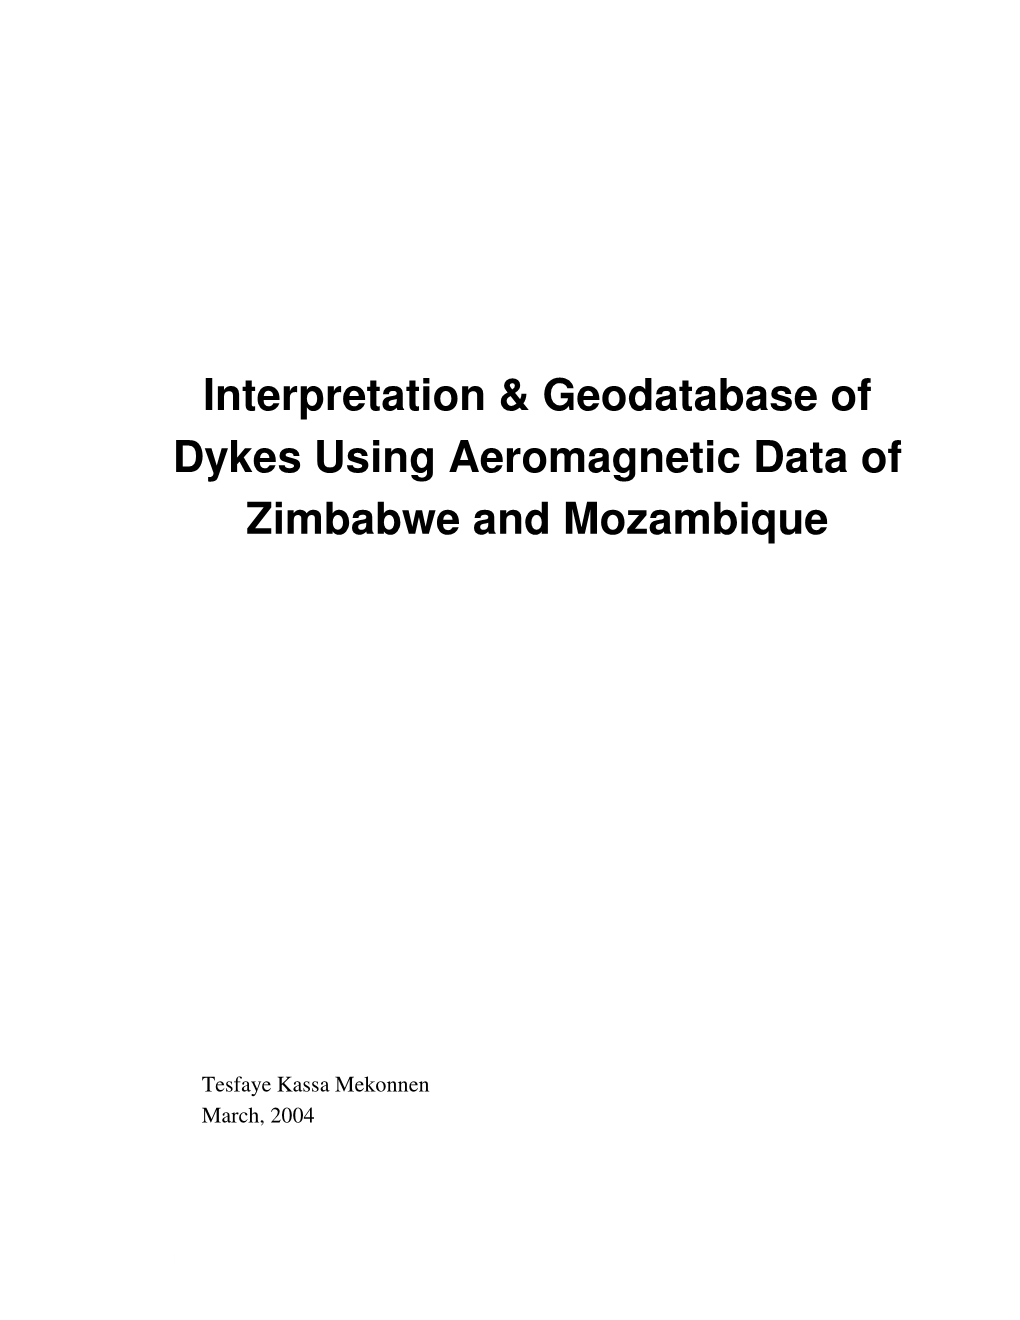 Interpretation & Geodatabase of Dykes Using Aeromagnetic Data Of